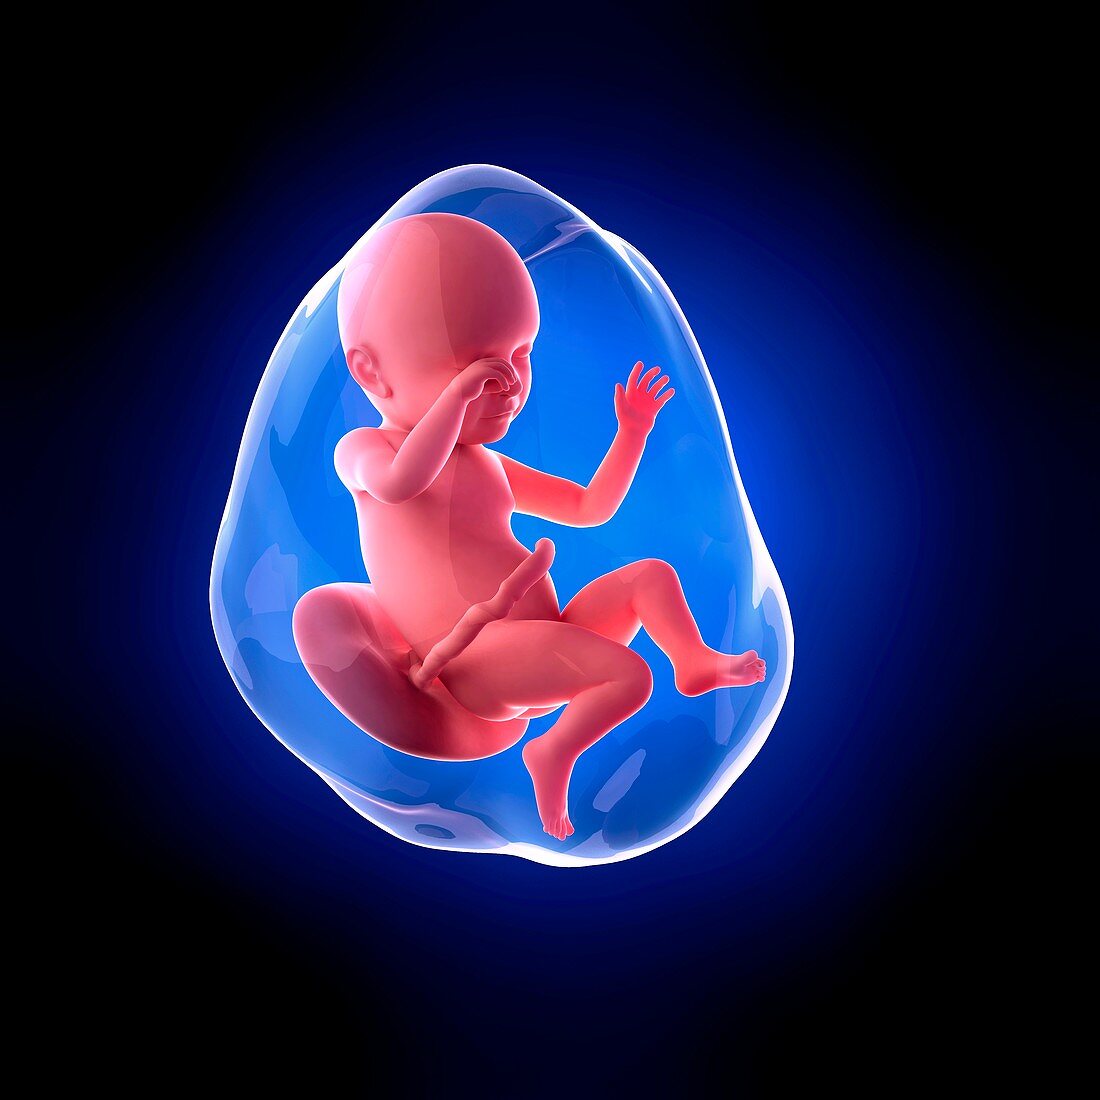 Human fetus age 39 weeks